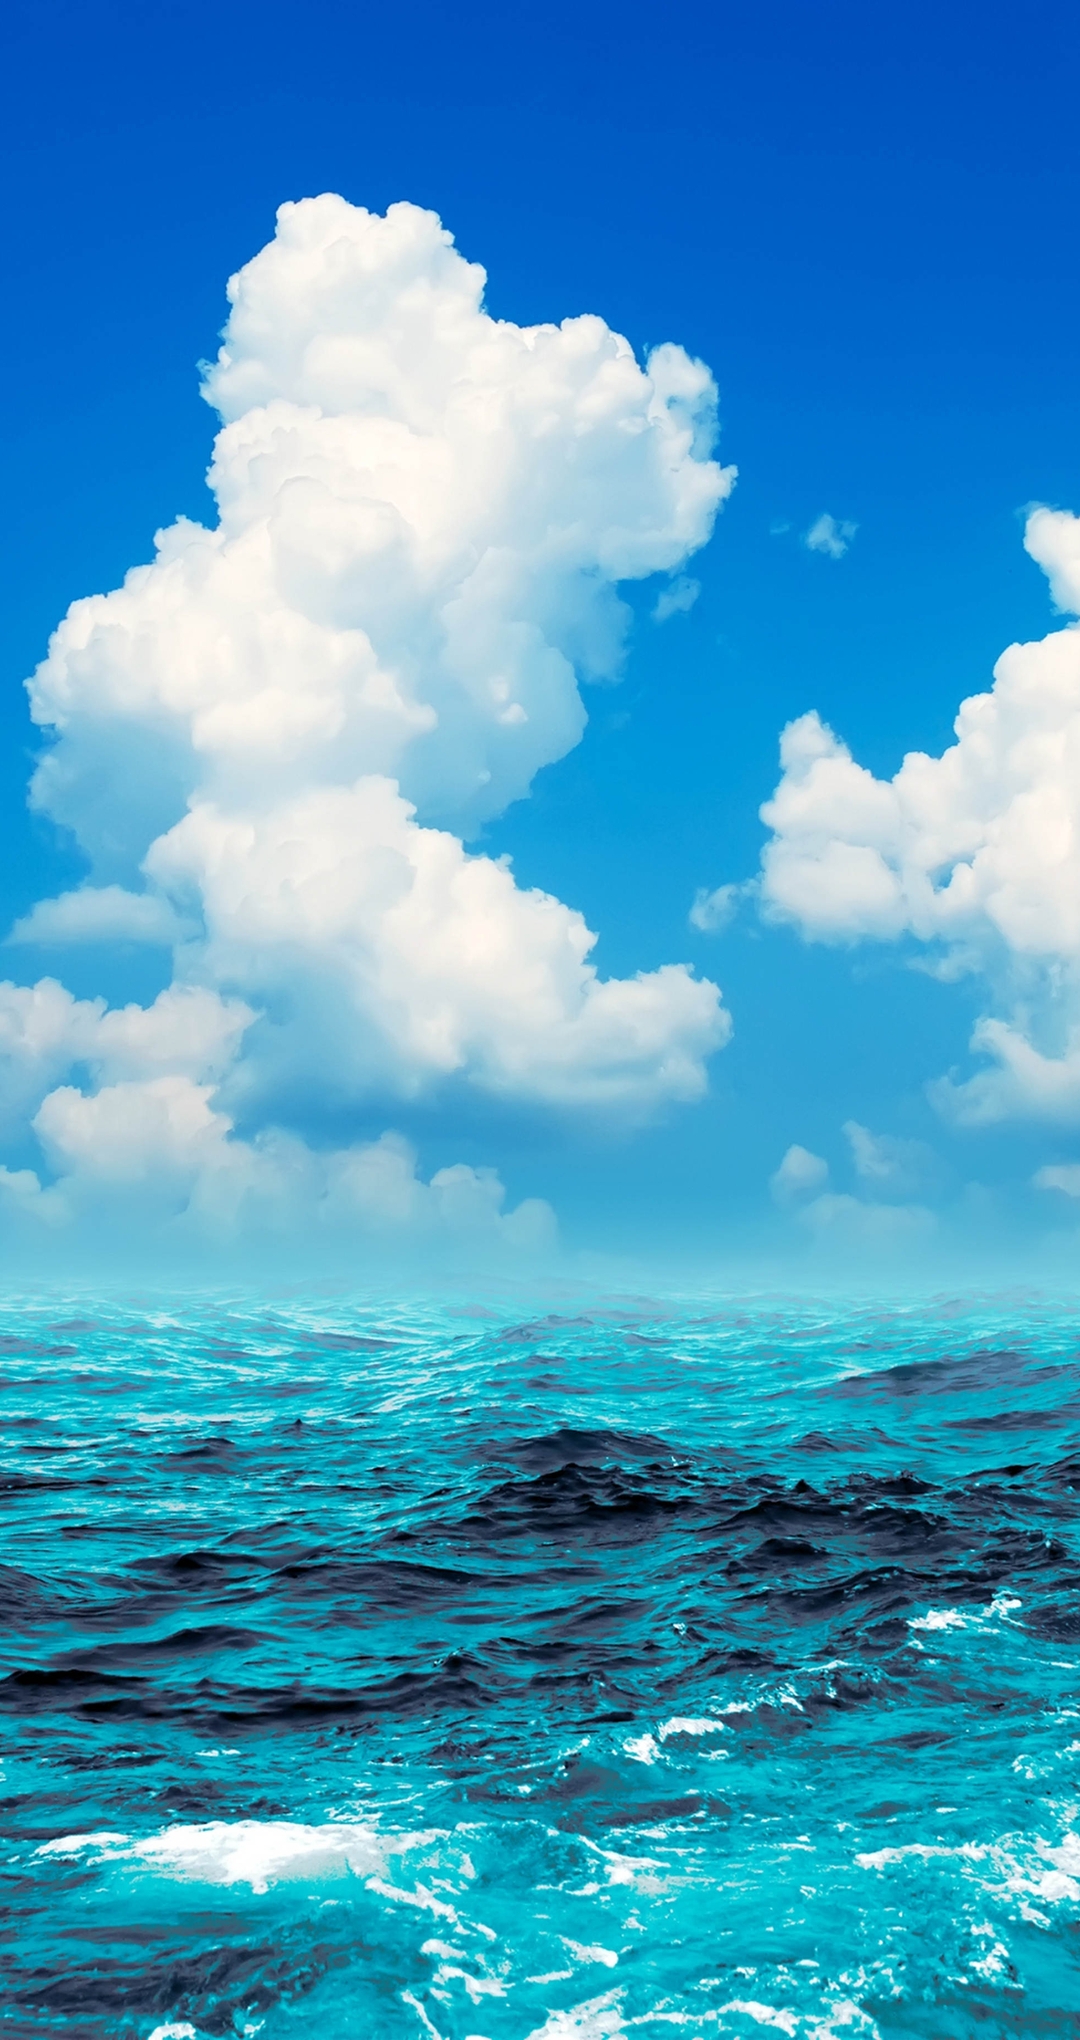 Картинка: Небо, голубое, облака, море, океан, волны, парус, лодка